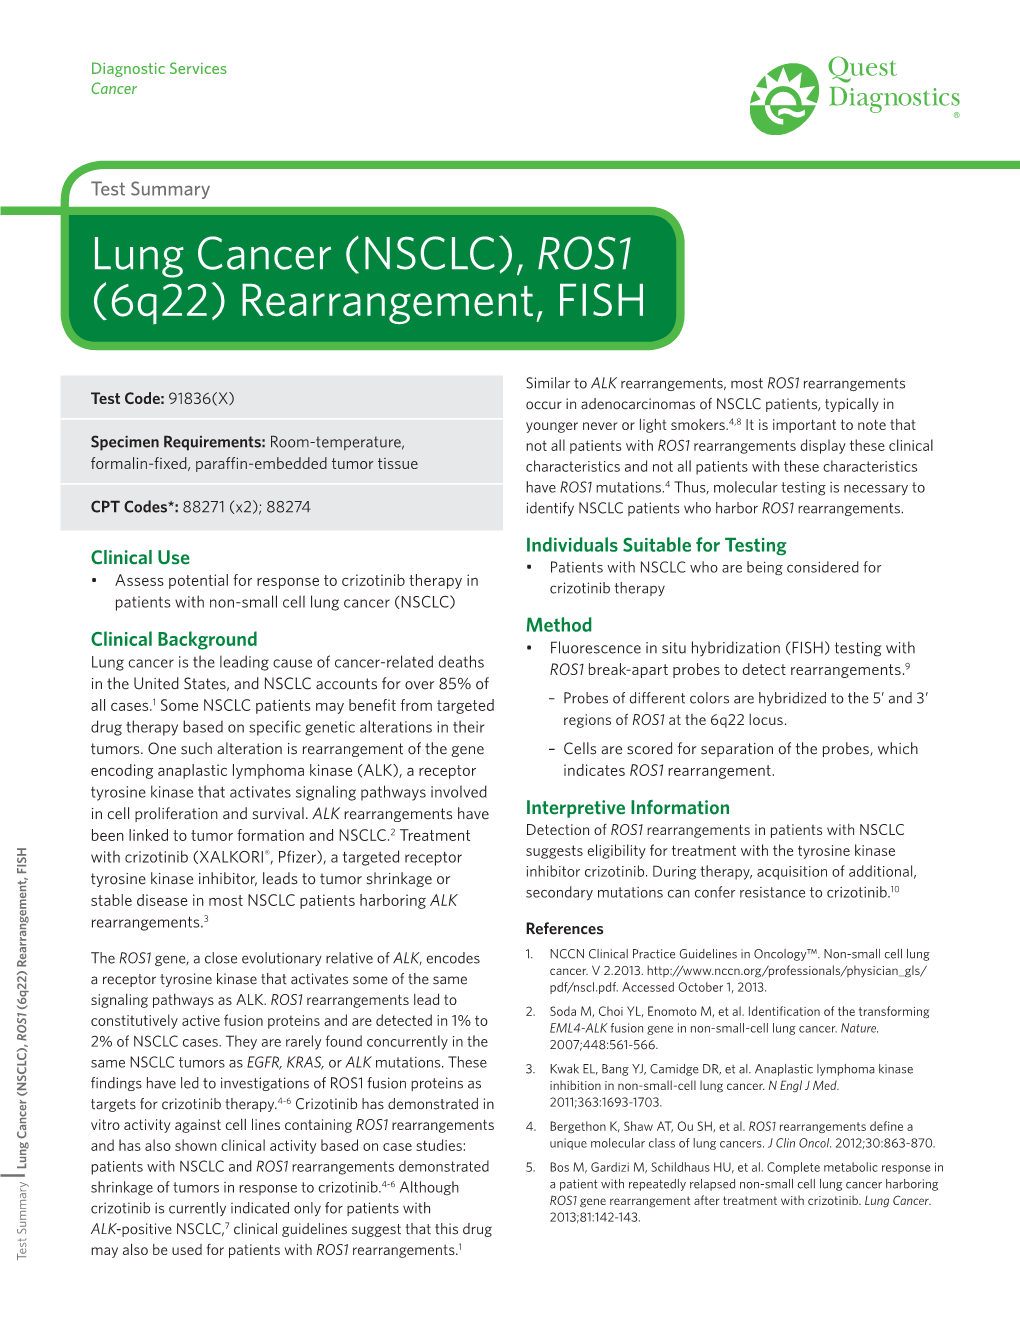 Lung Cancer (NSCLC), ROS1 (6Q22) Rearrangement, FISH